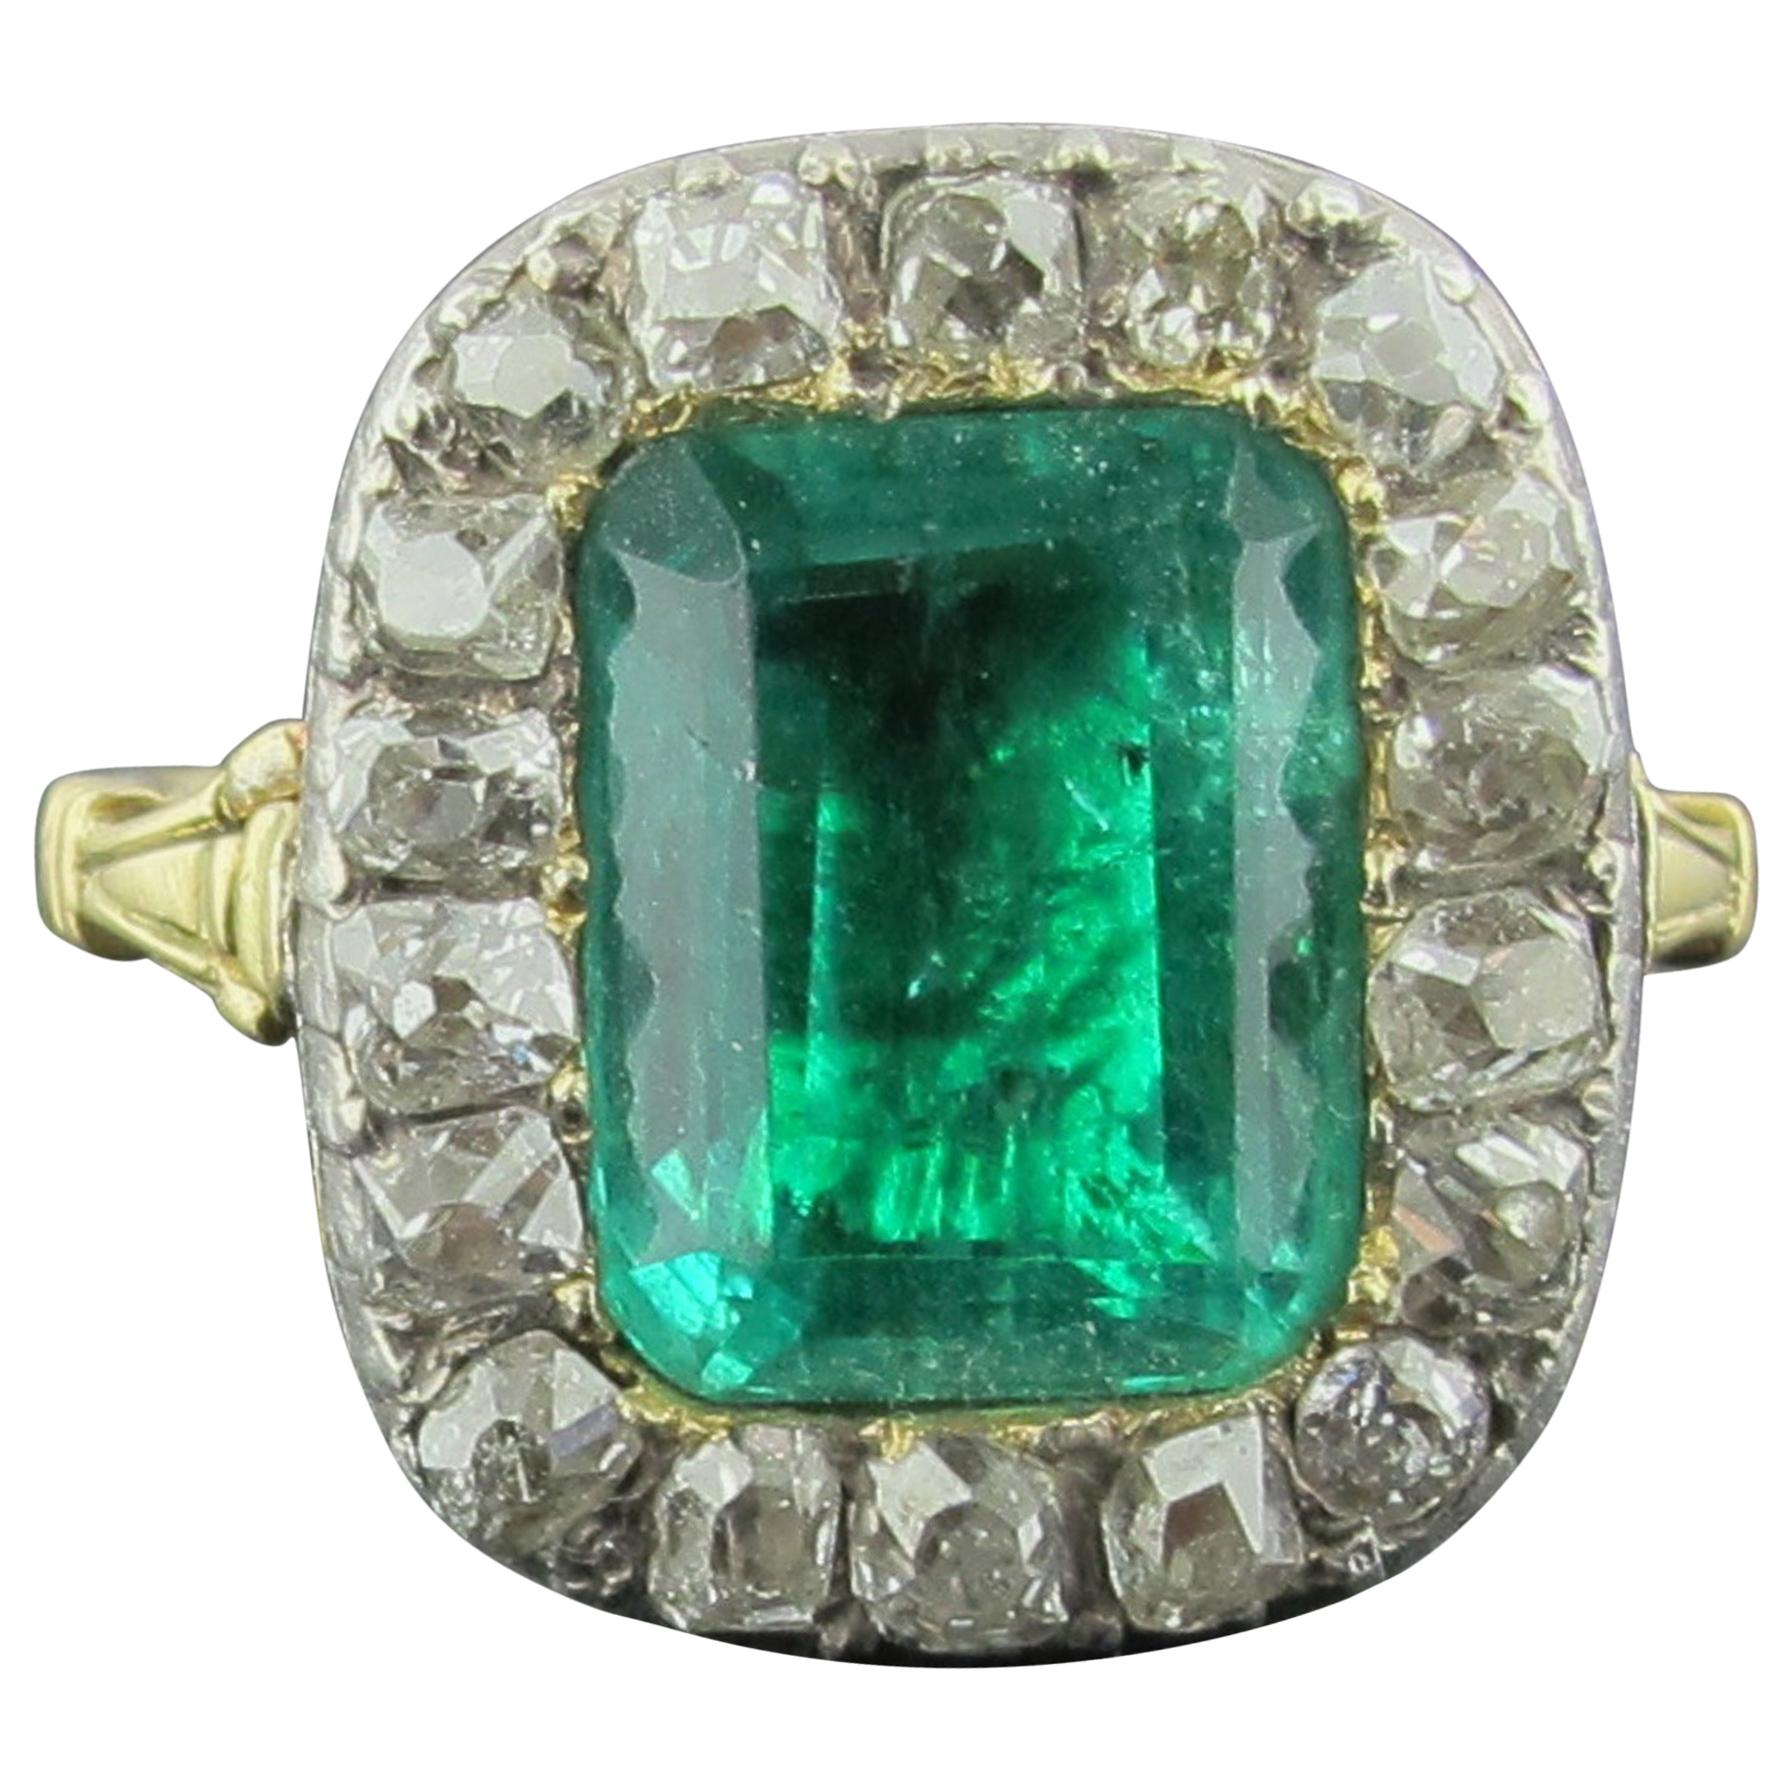 6 Carat Emerald and Diamond Ring, Silver on 14 Karat Gold, circa 1880